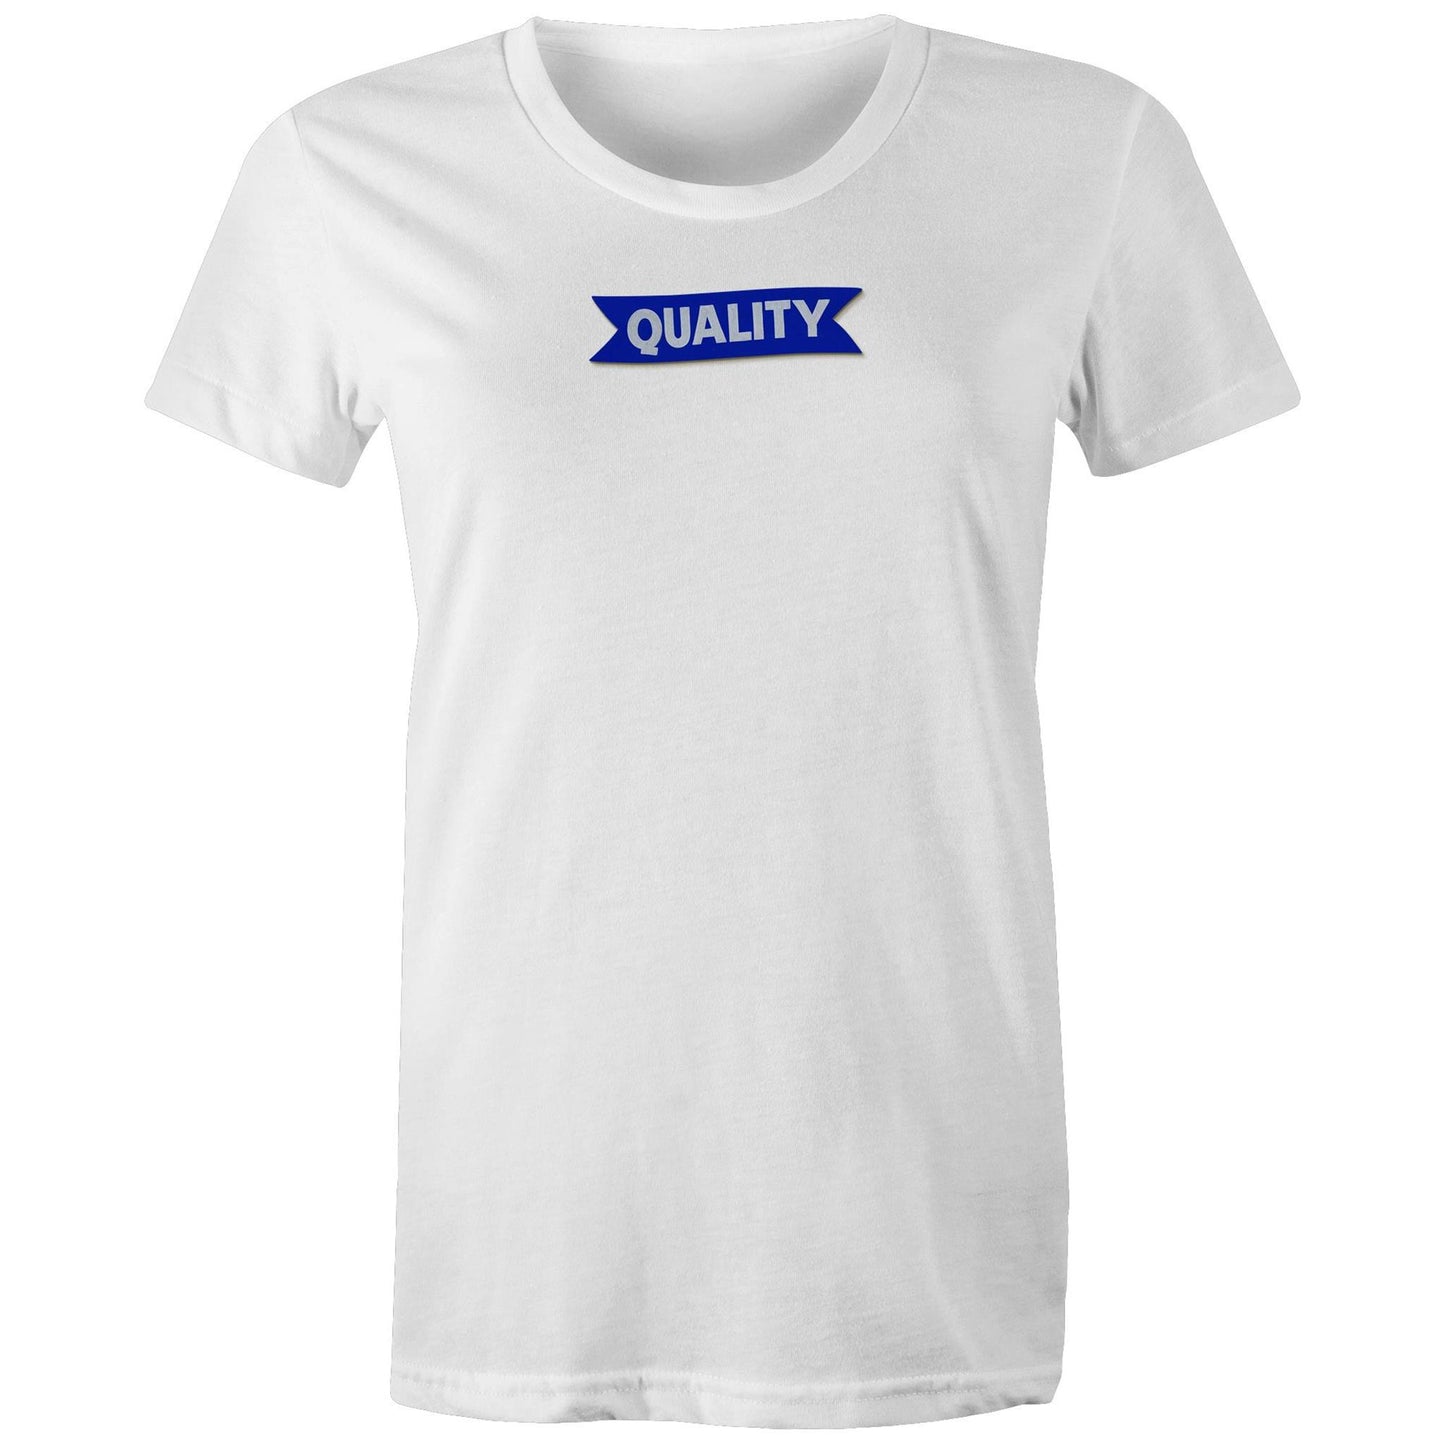 Quality Ribbon T Shirts for Women